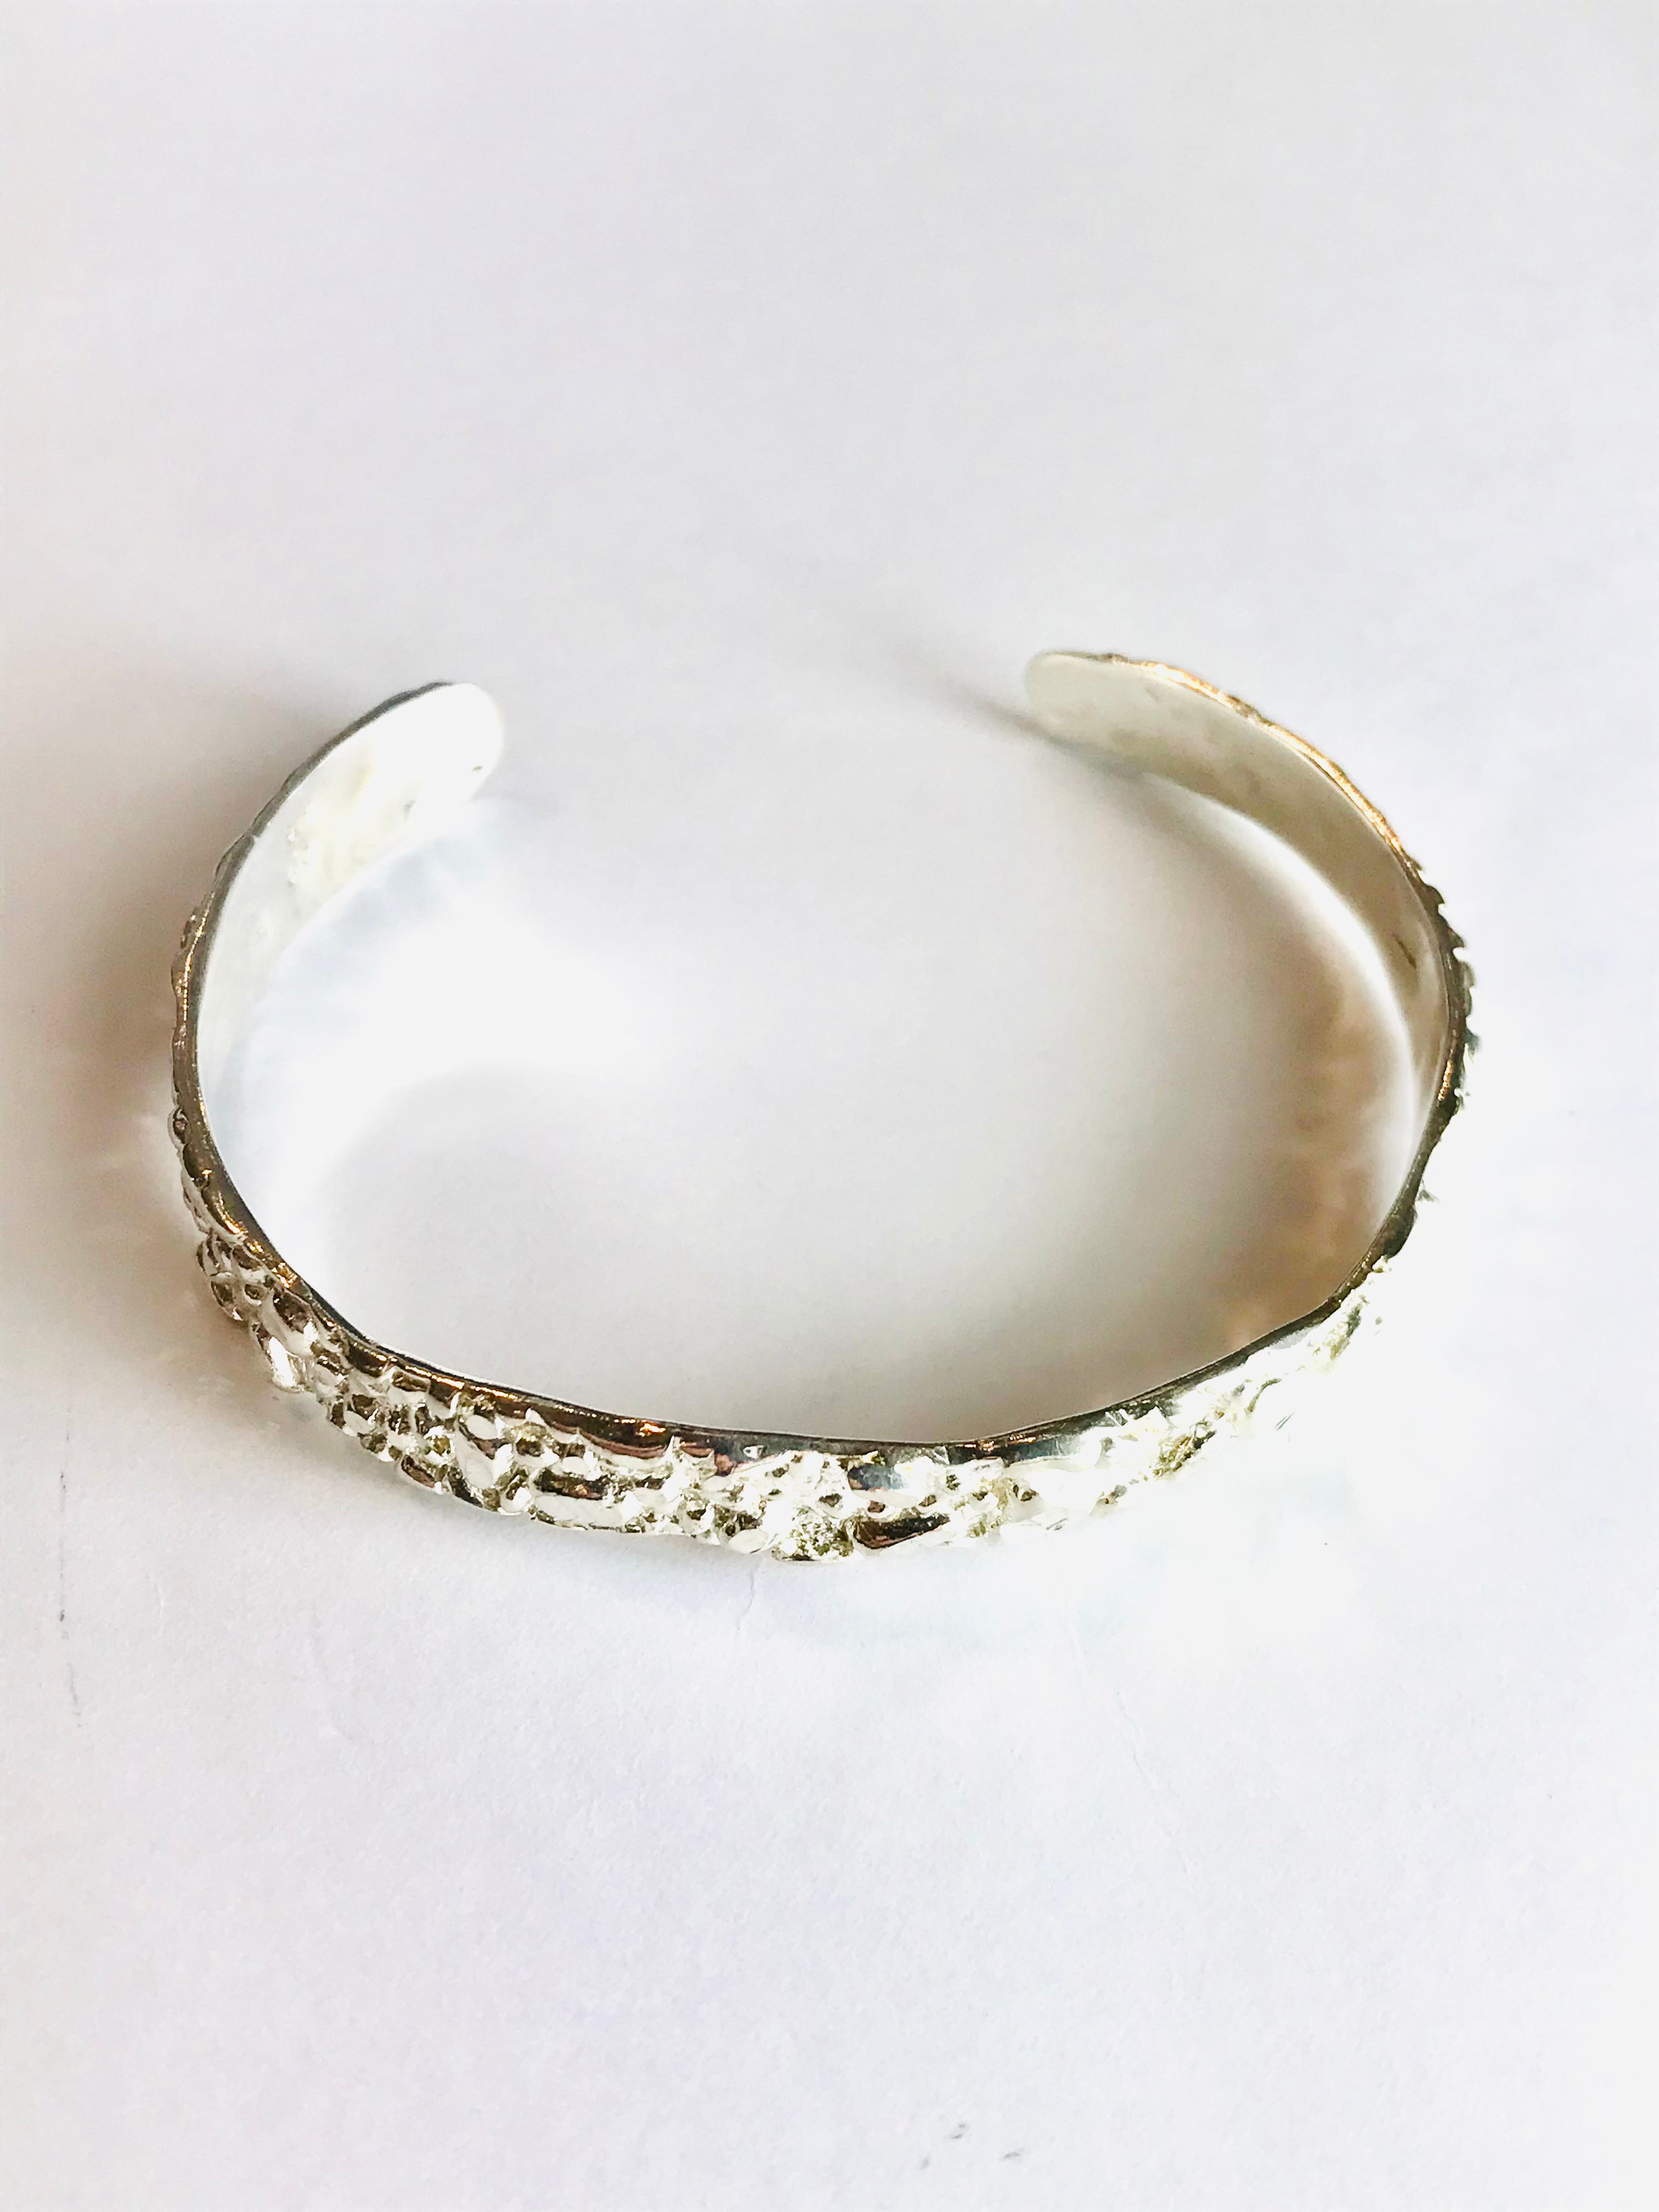 Silver Volcanic Cuff - The Nancy Smillie Shop - Art, Jewellery & Designer Gifts Glasgow